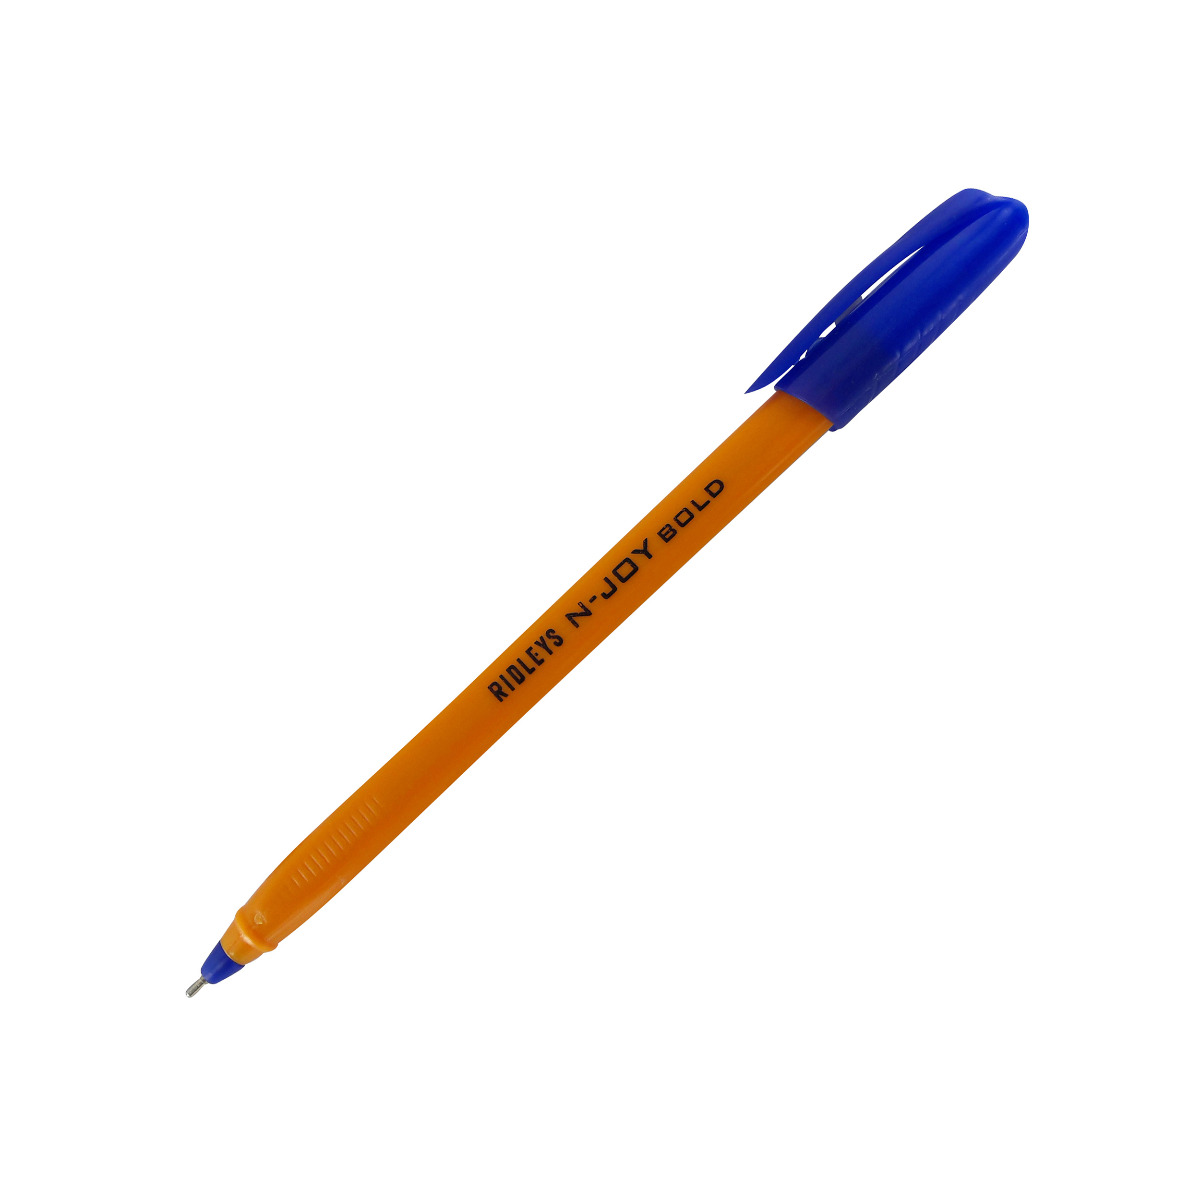 Ridleys Model No: 12038 N Joy Bold Blue Color Writing Orange Color Body Ball pen